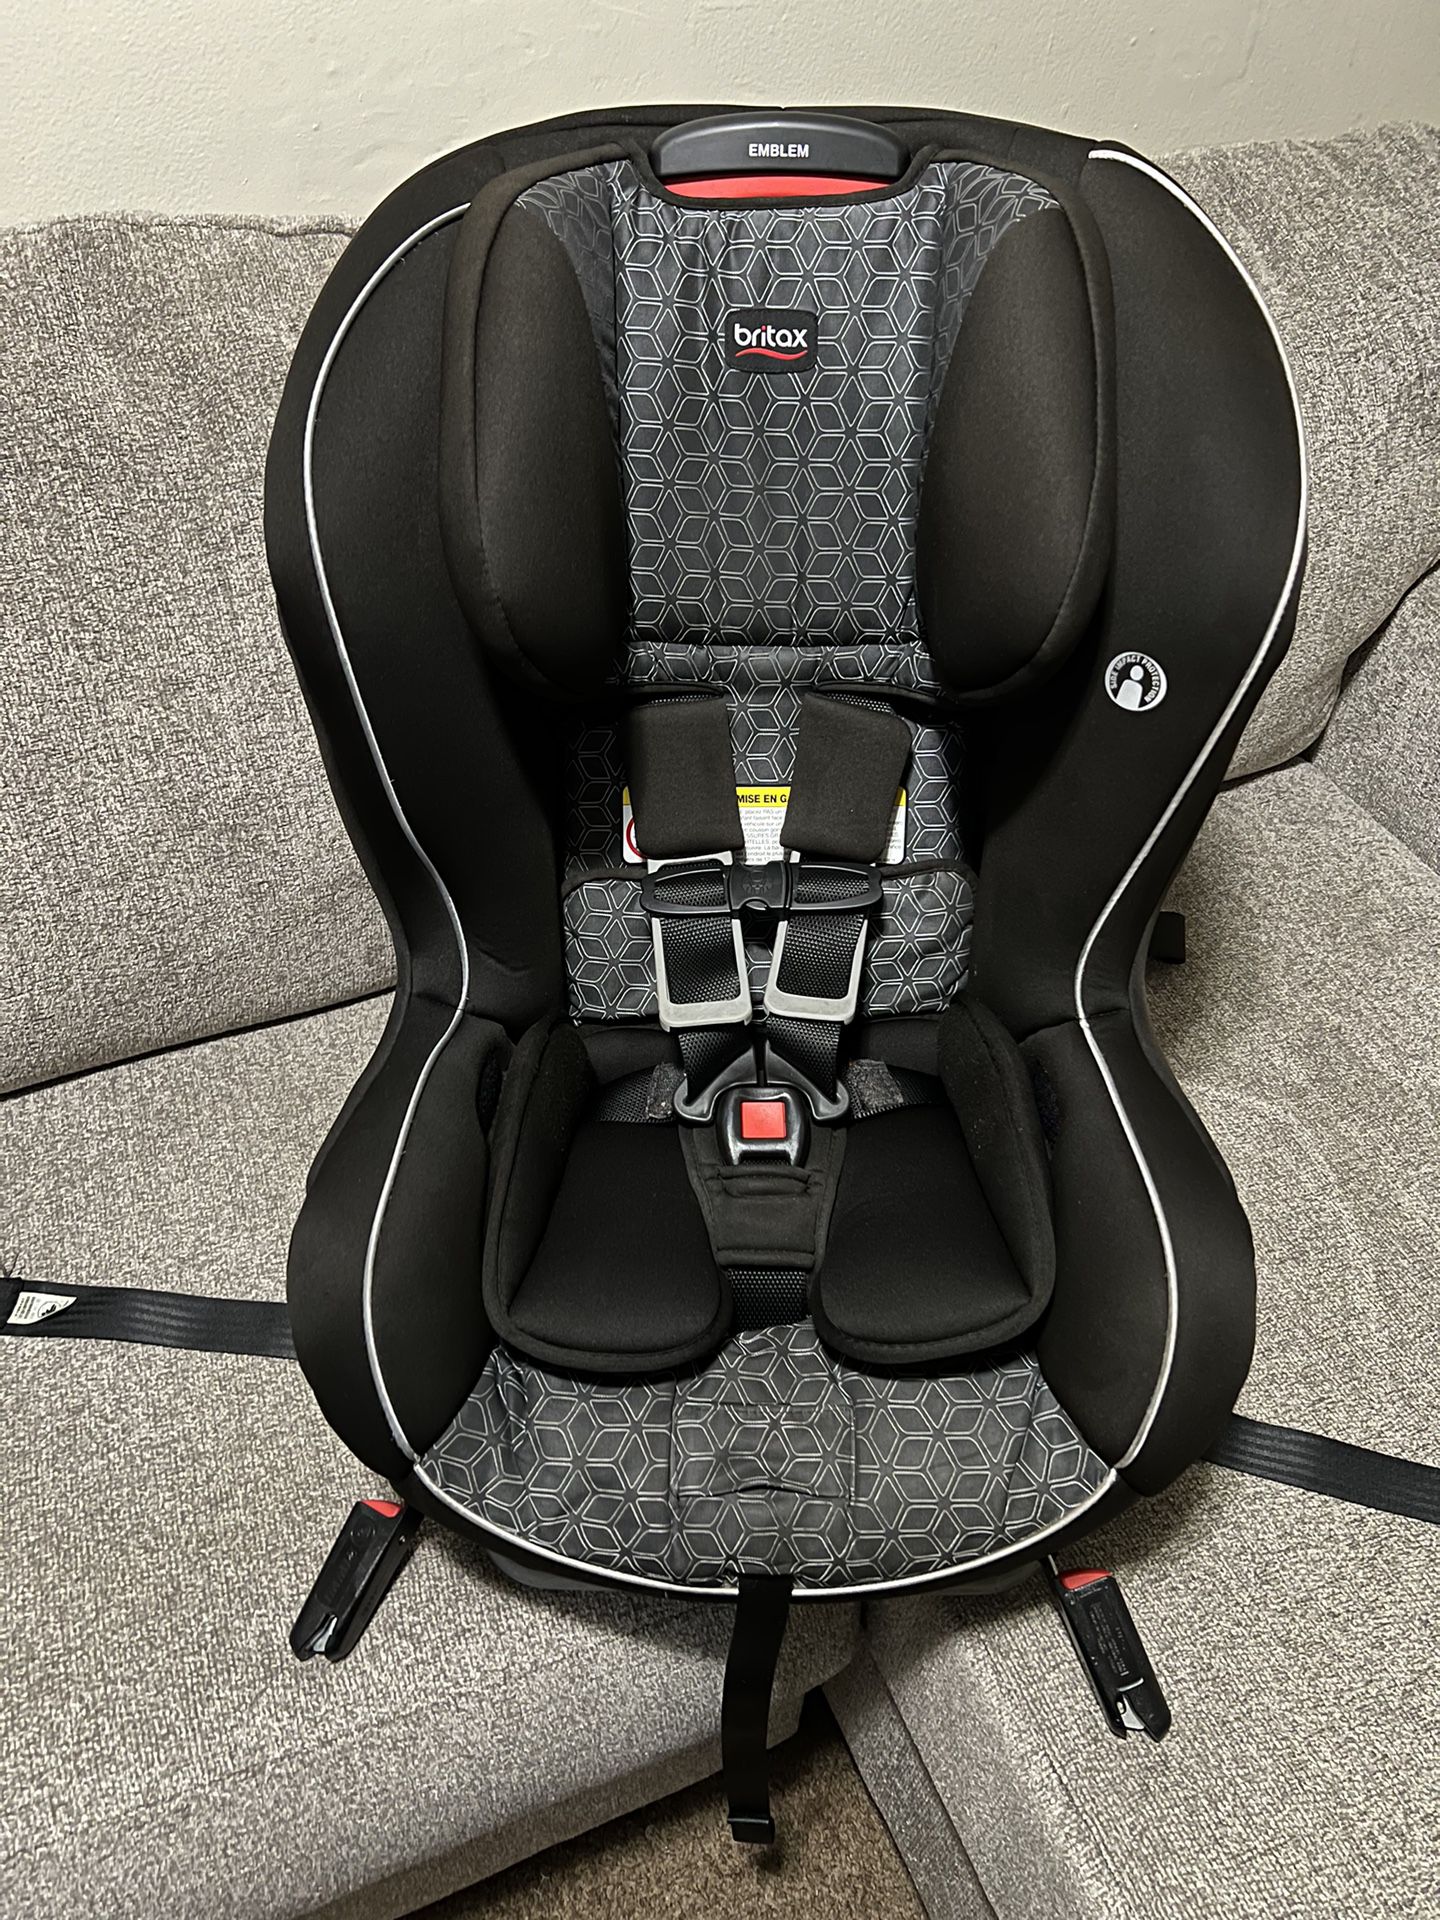 Britax Emblem 3 Stage Convertible Car Seat